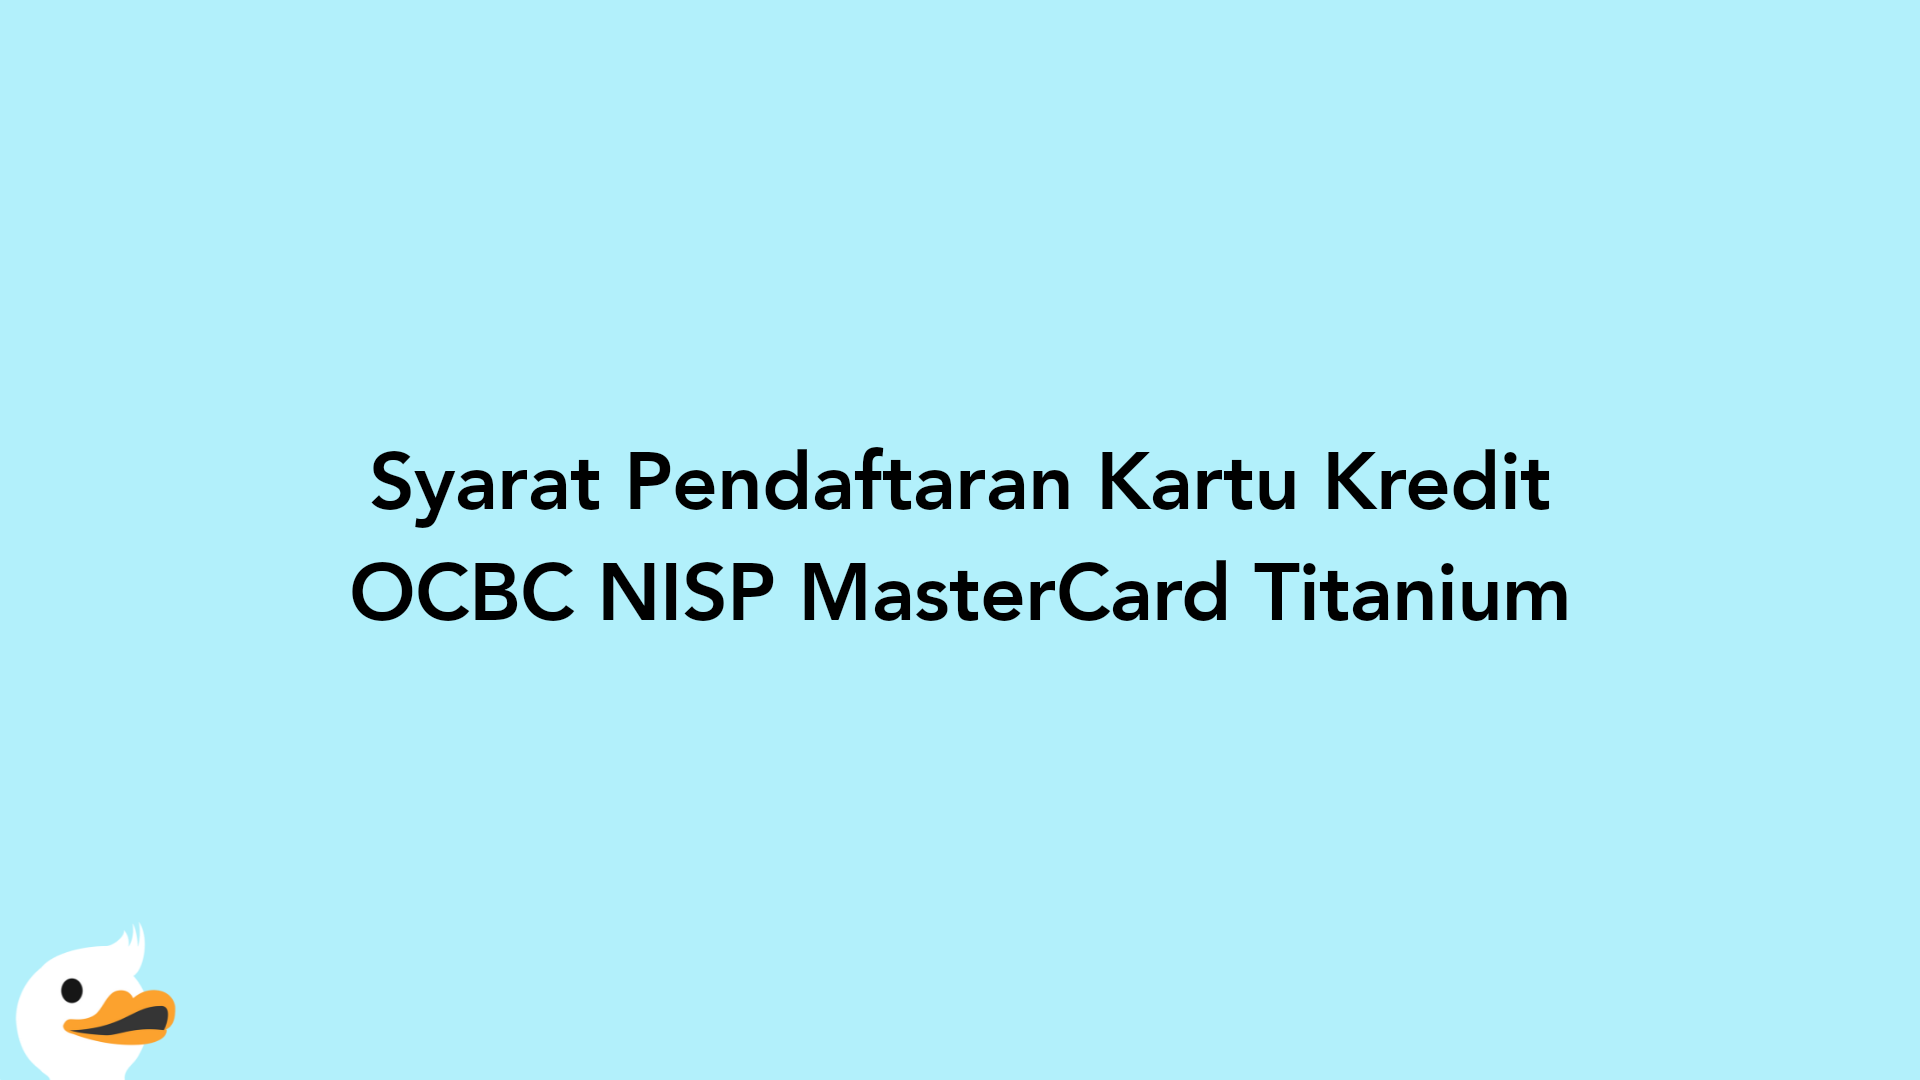 Syarat Pendaftaran Kartu Kredit OCBC NISP MasterCard Titanium